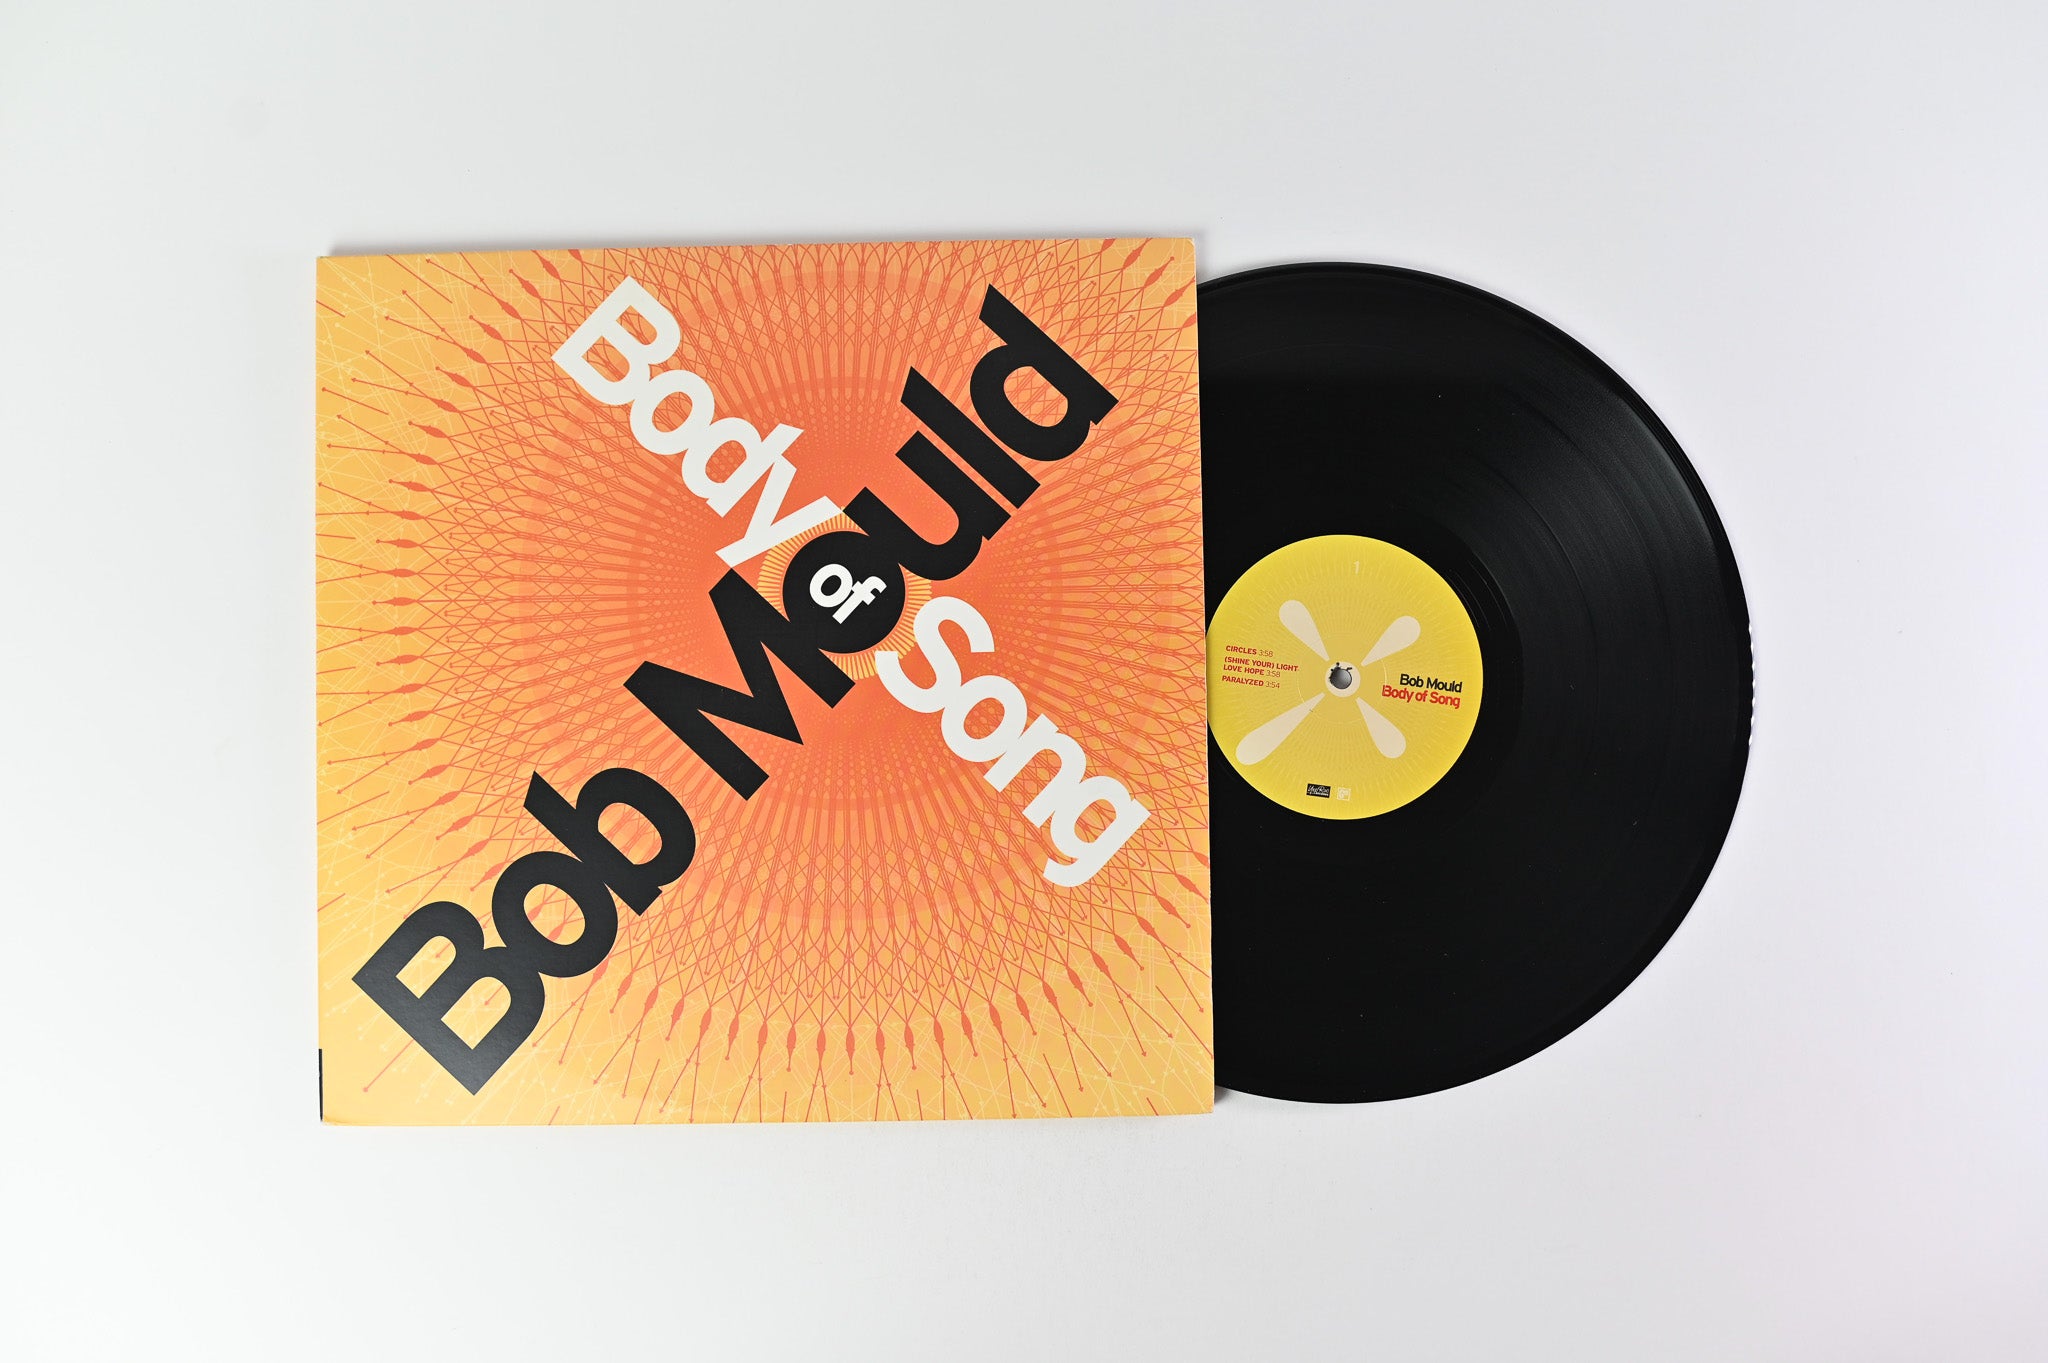 Bob Mould - Body Of Song on Yep Roc